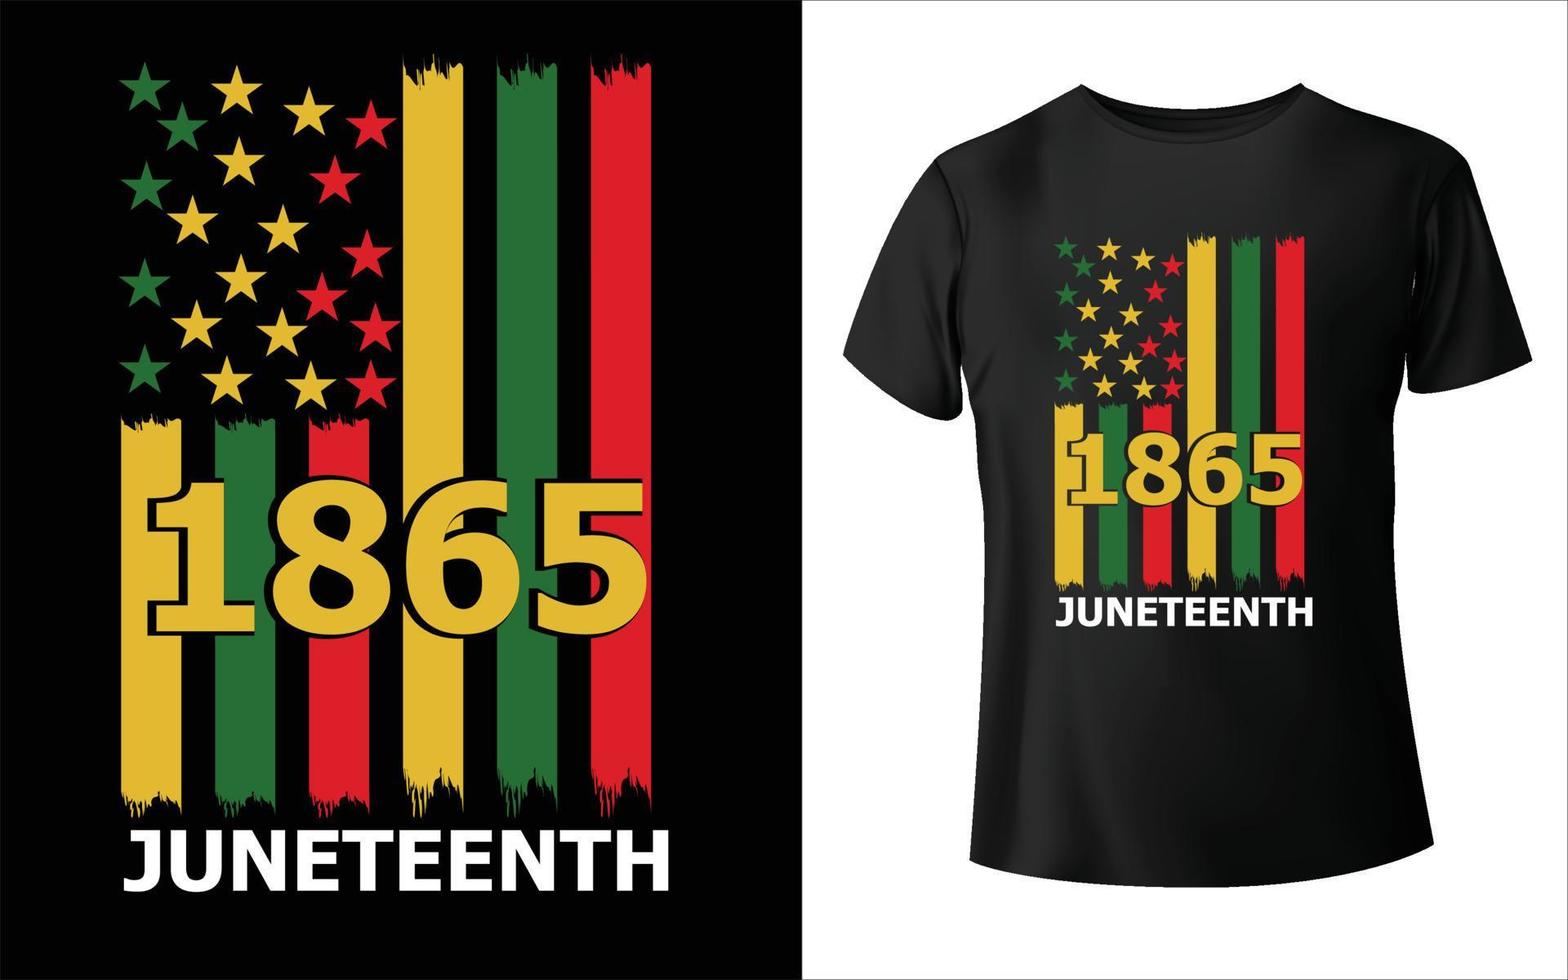 junitiende dag t-shirtontwerp, juniteenth1865 t-shirtontwerp vandaag op juni de dag dat we t-shirt vieren vector